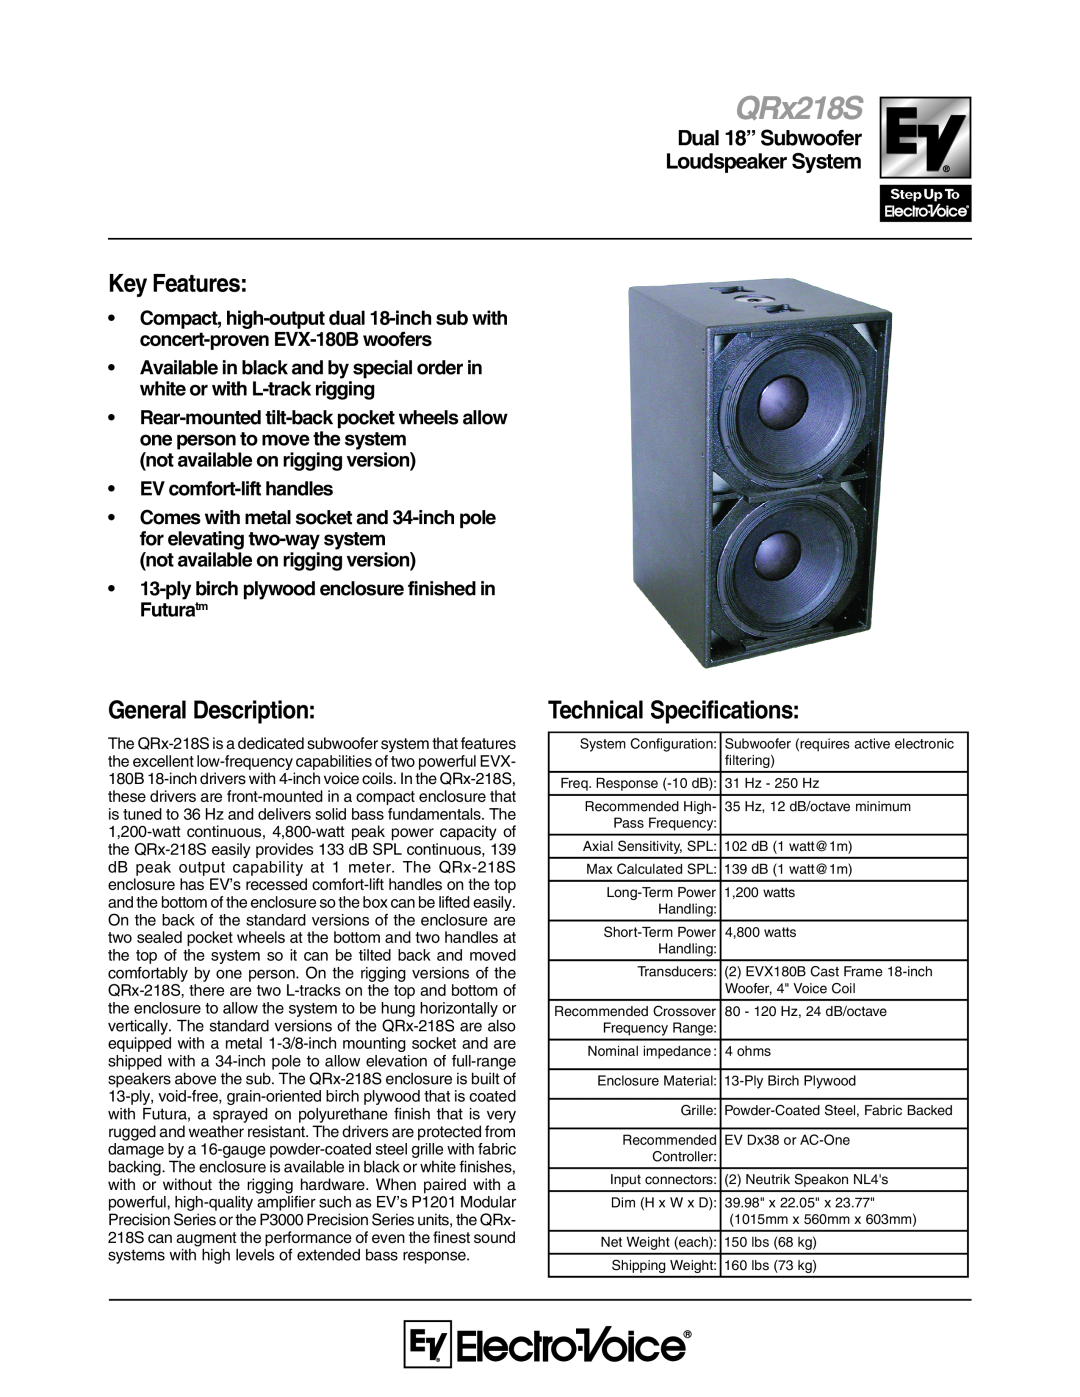 Electro-Voice QRx 218S technical specifications Key Features, General Description, Technical Specifications, QRx218S 